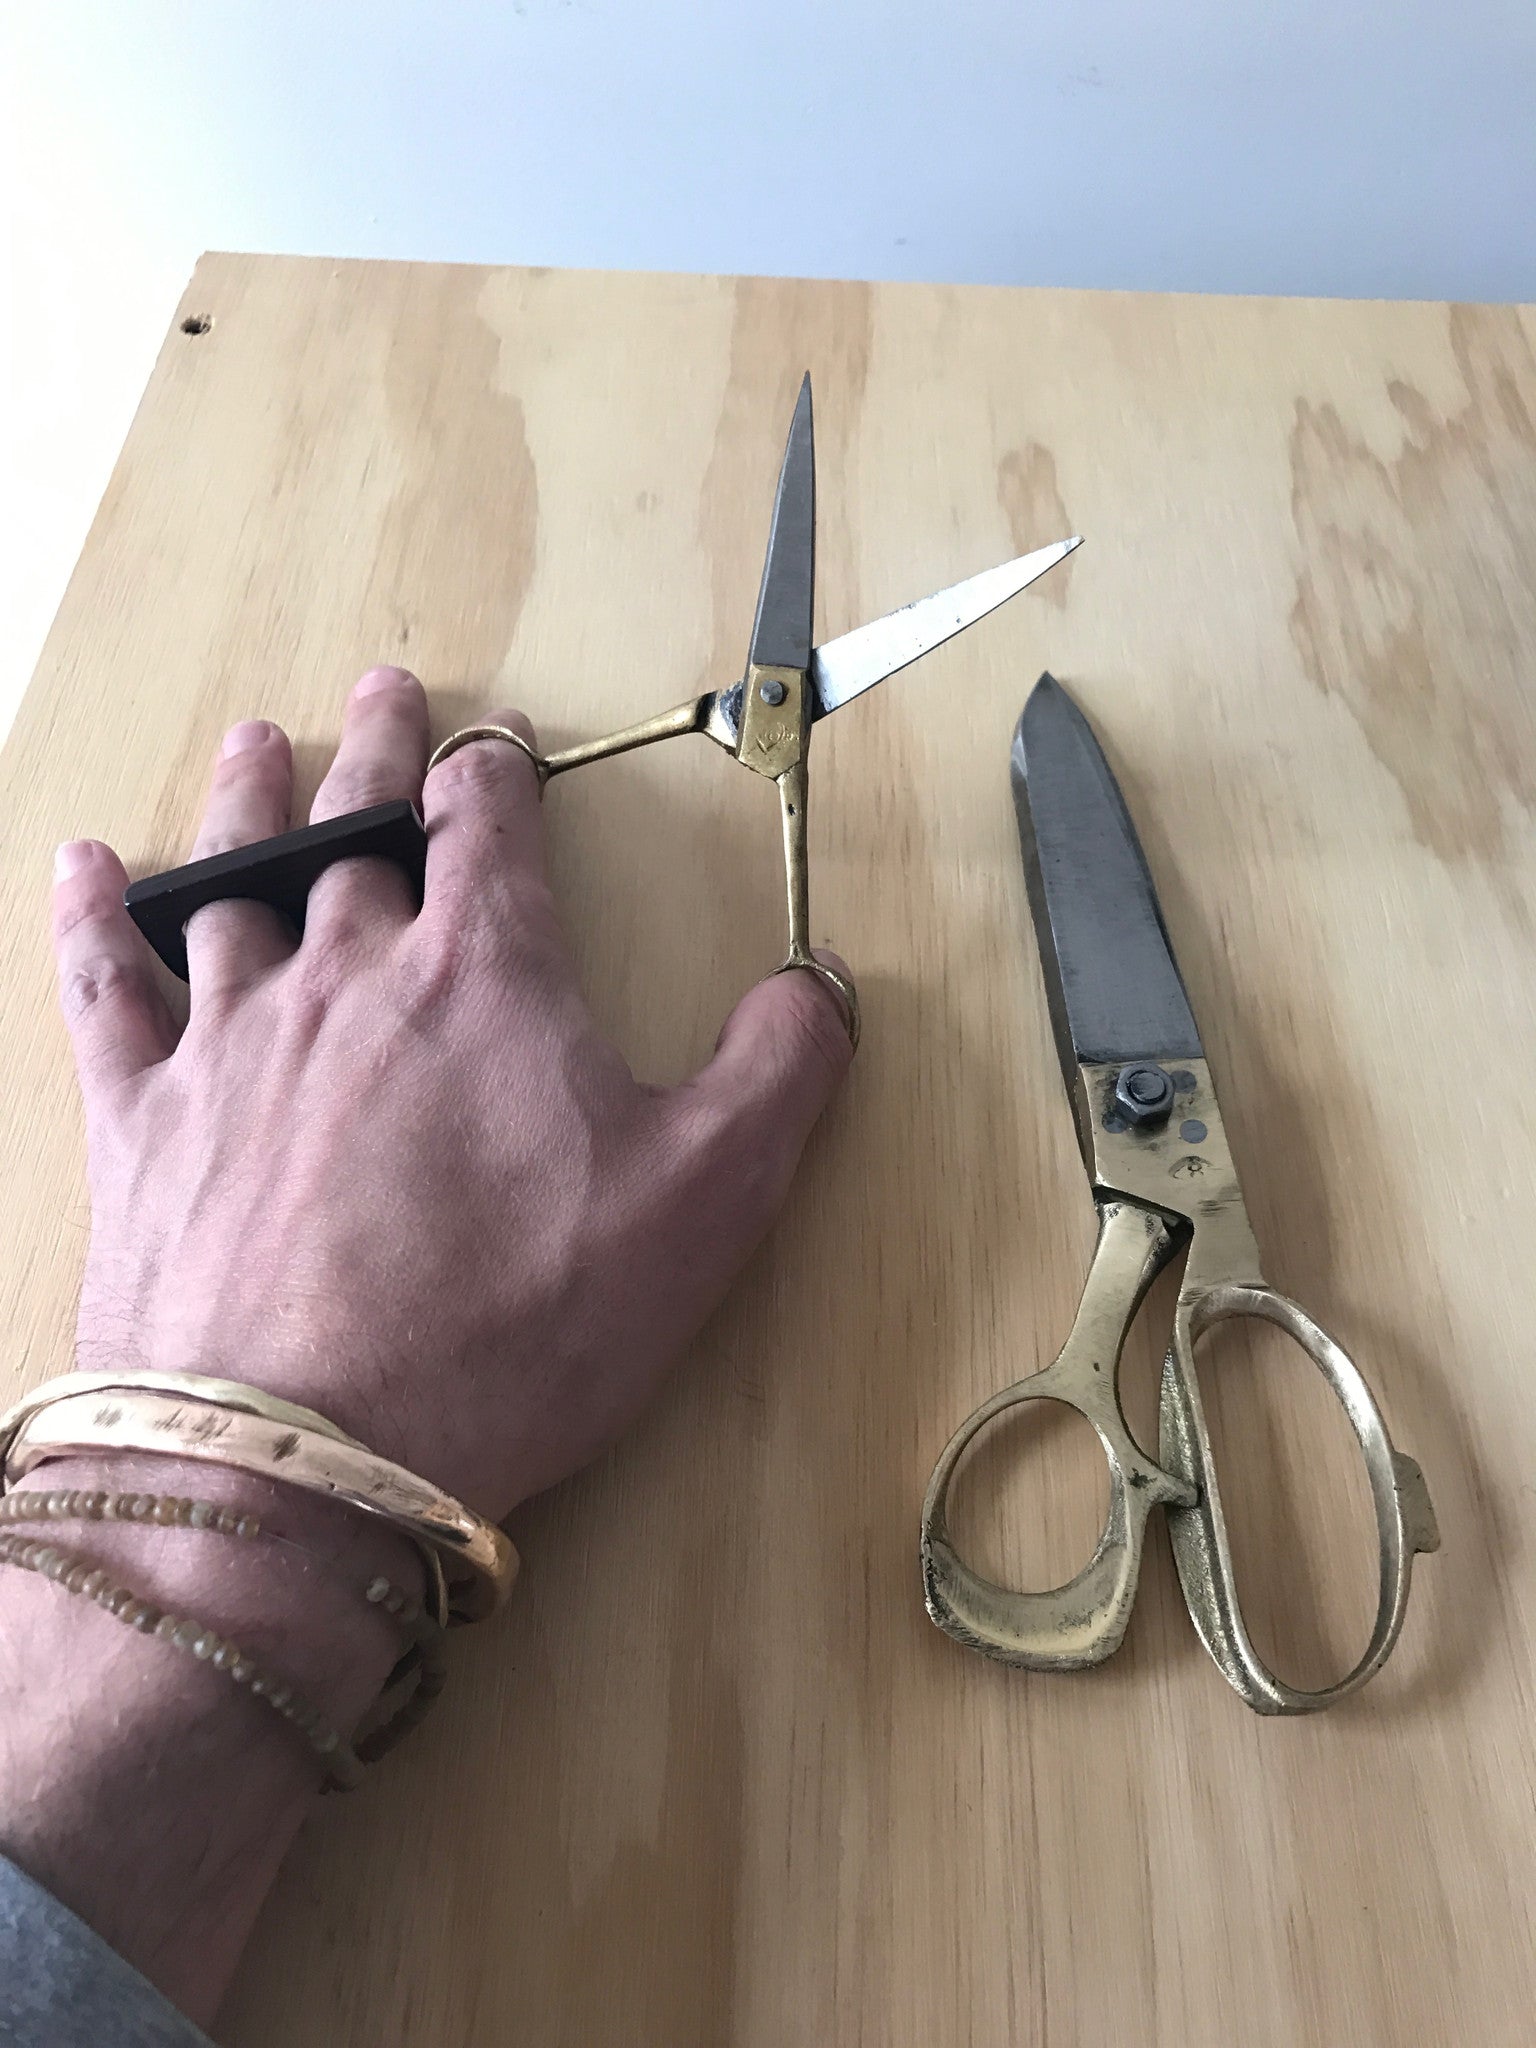 Small Craft Scissors - Habitat Potch